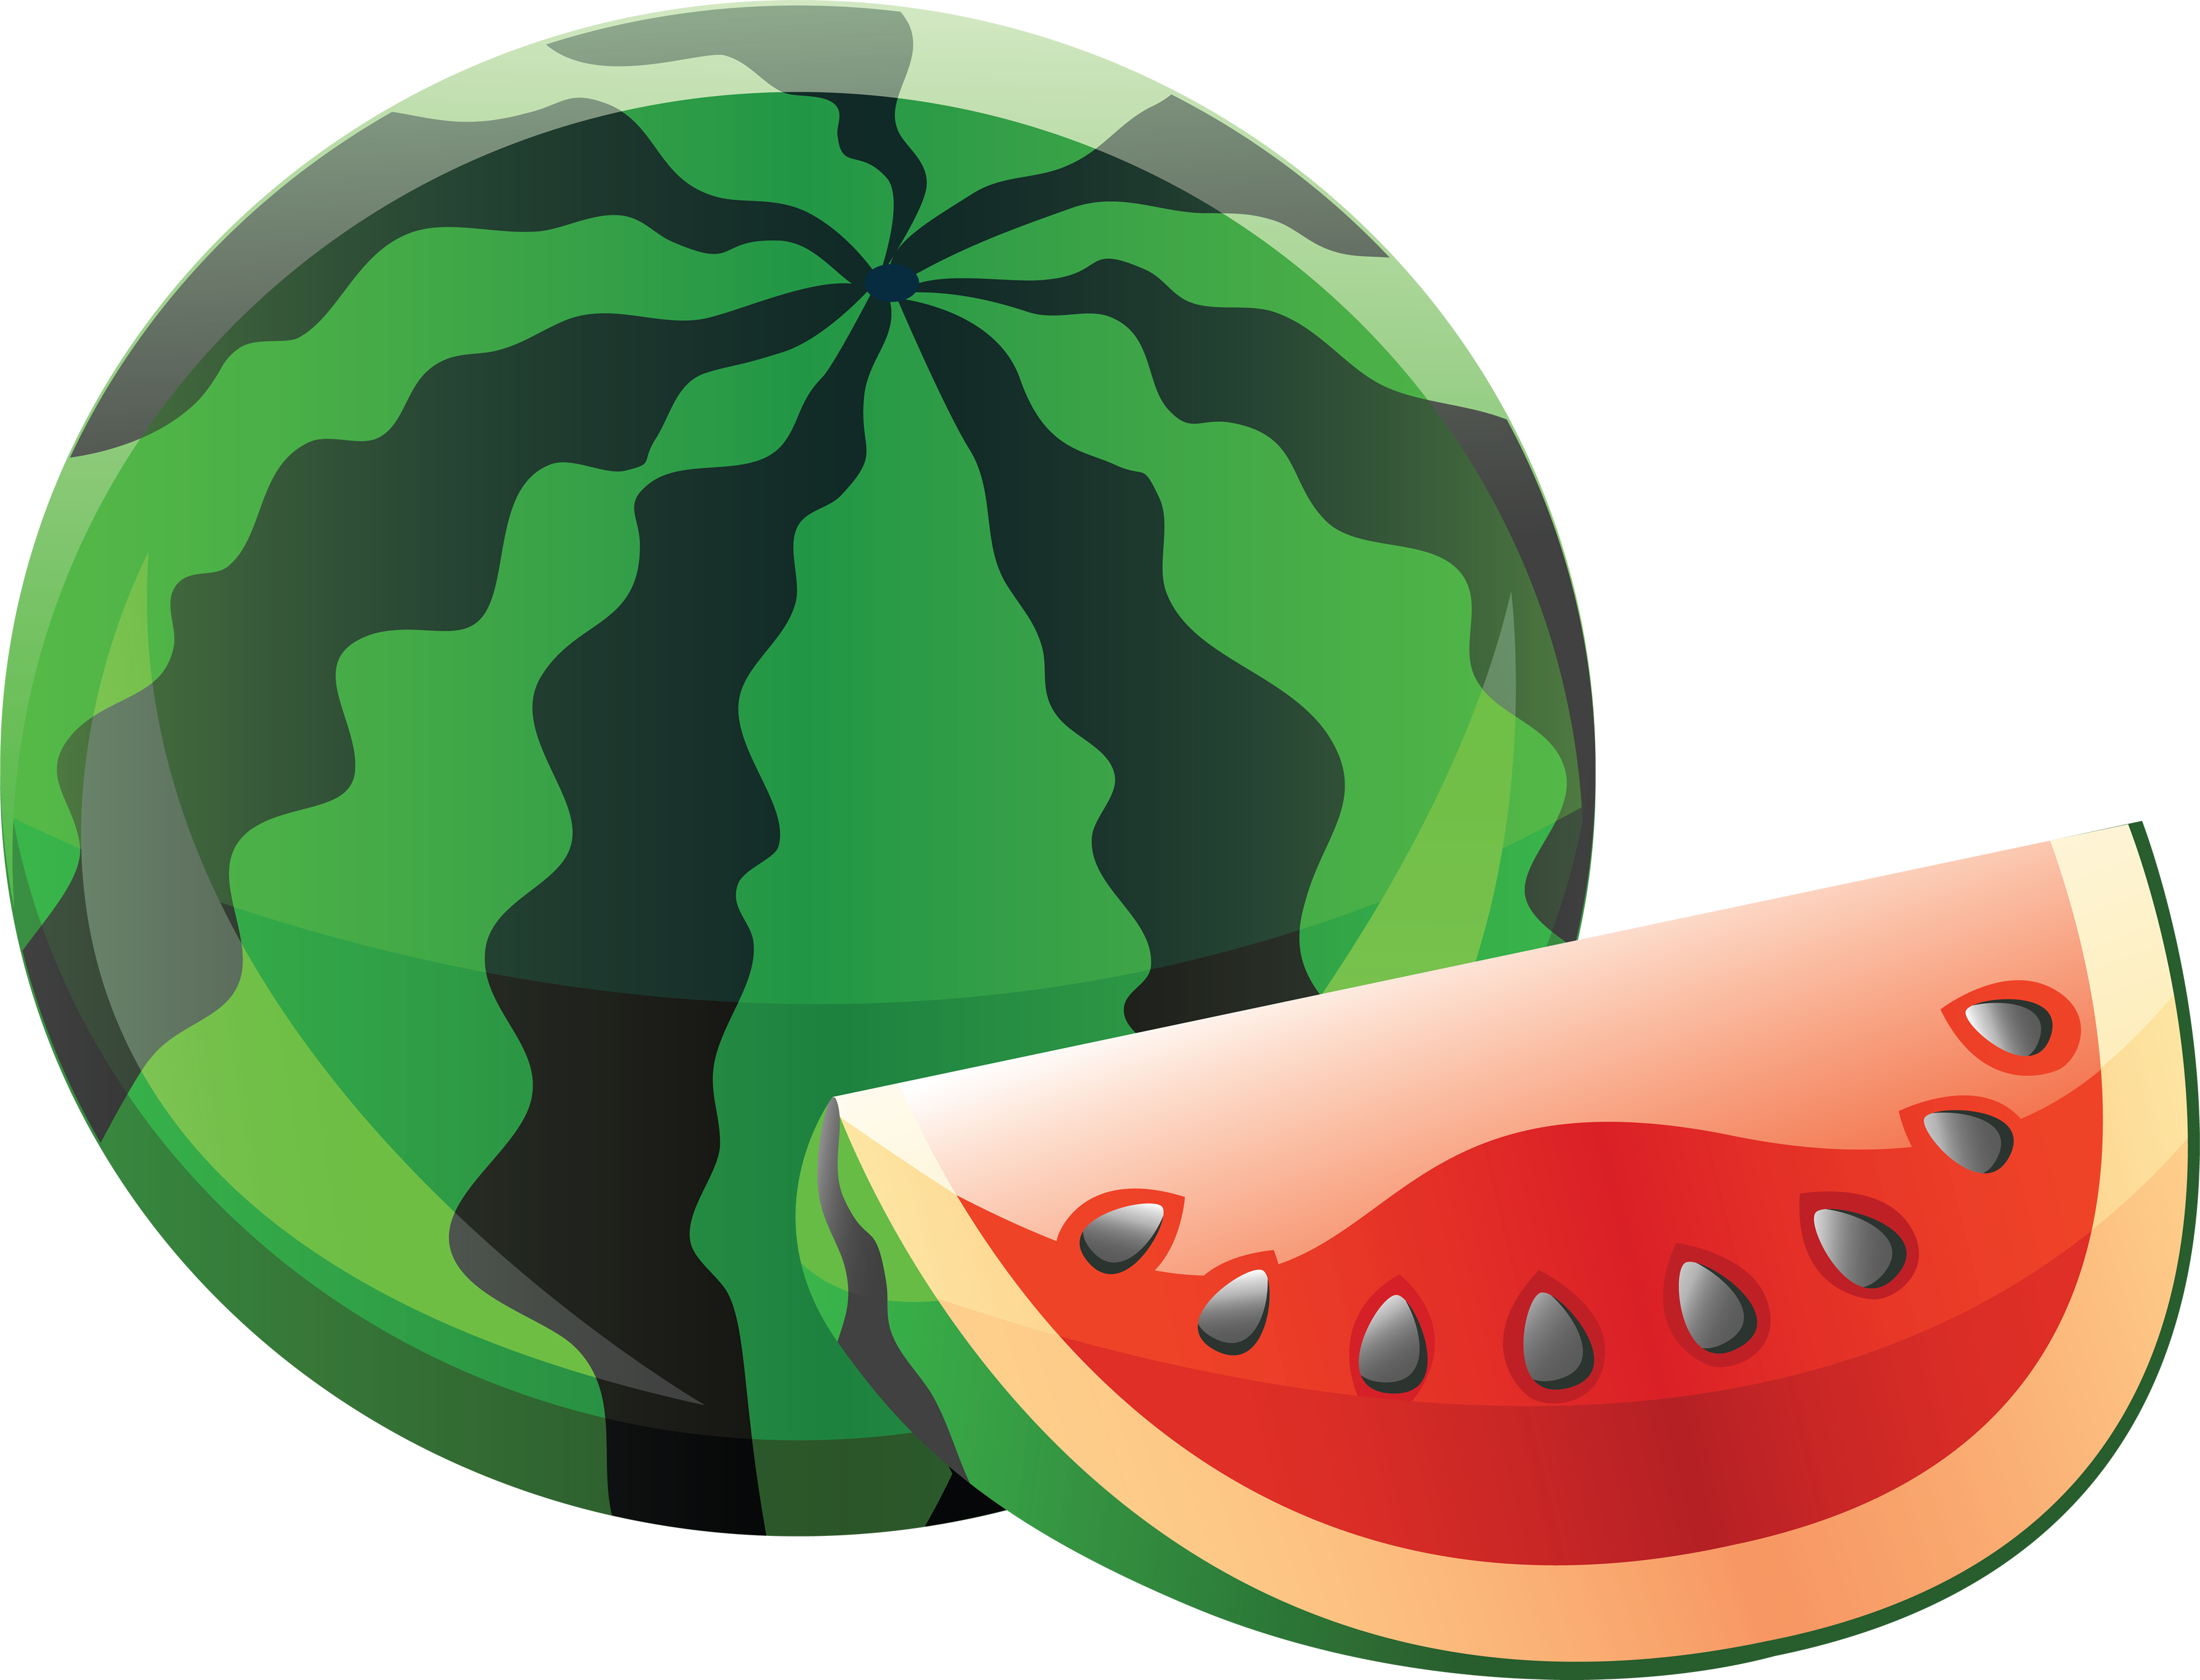 Watermelon10